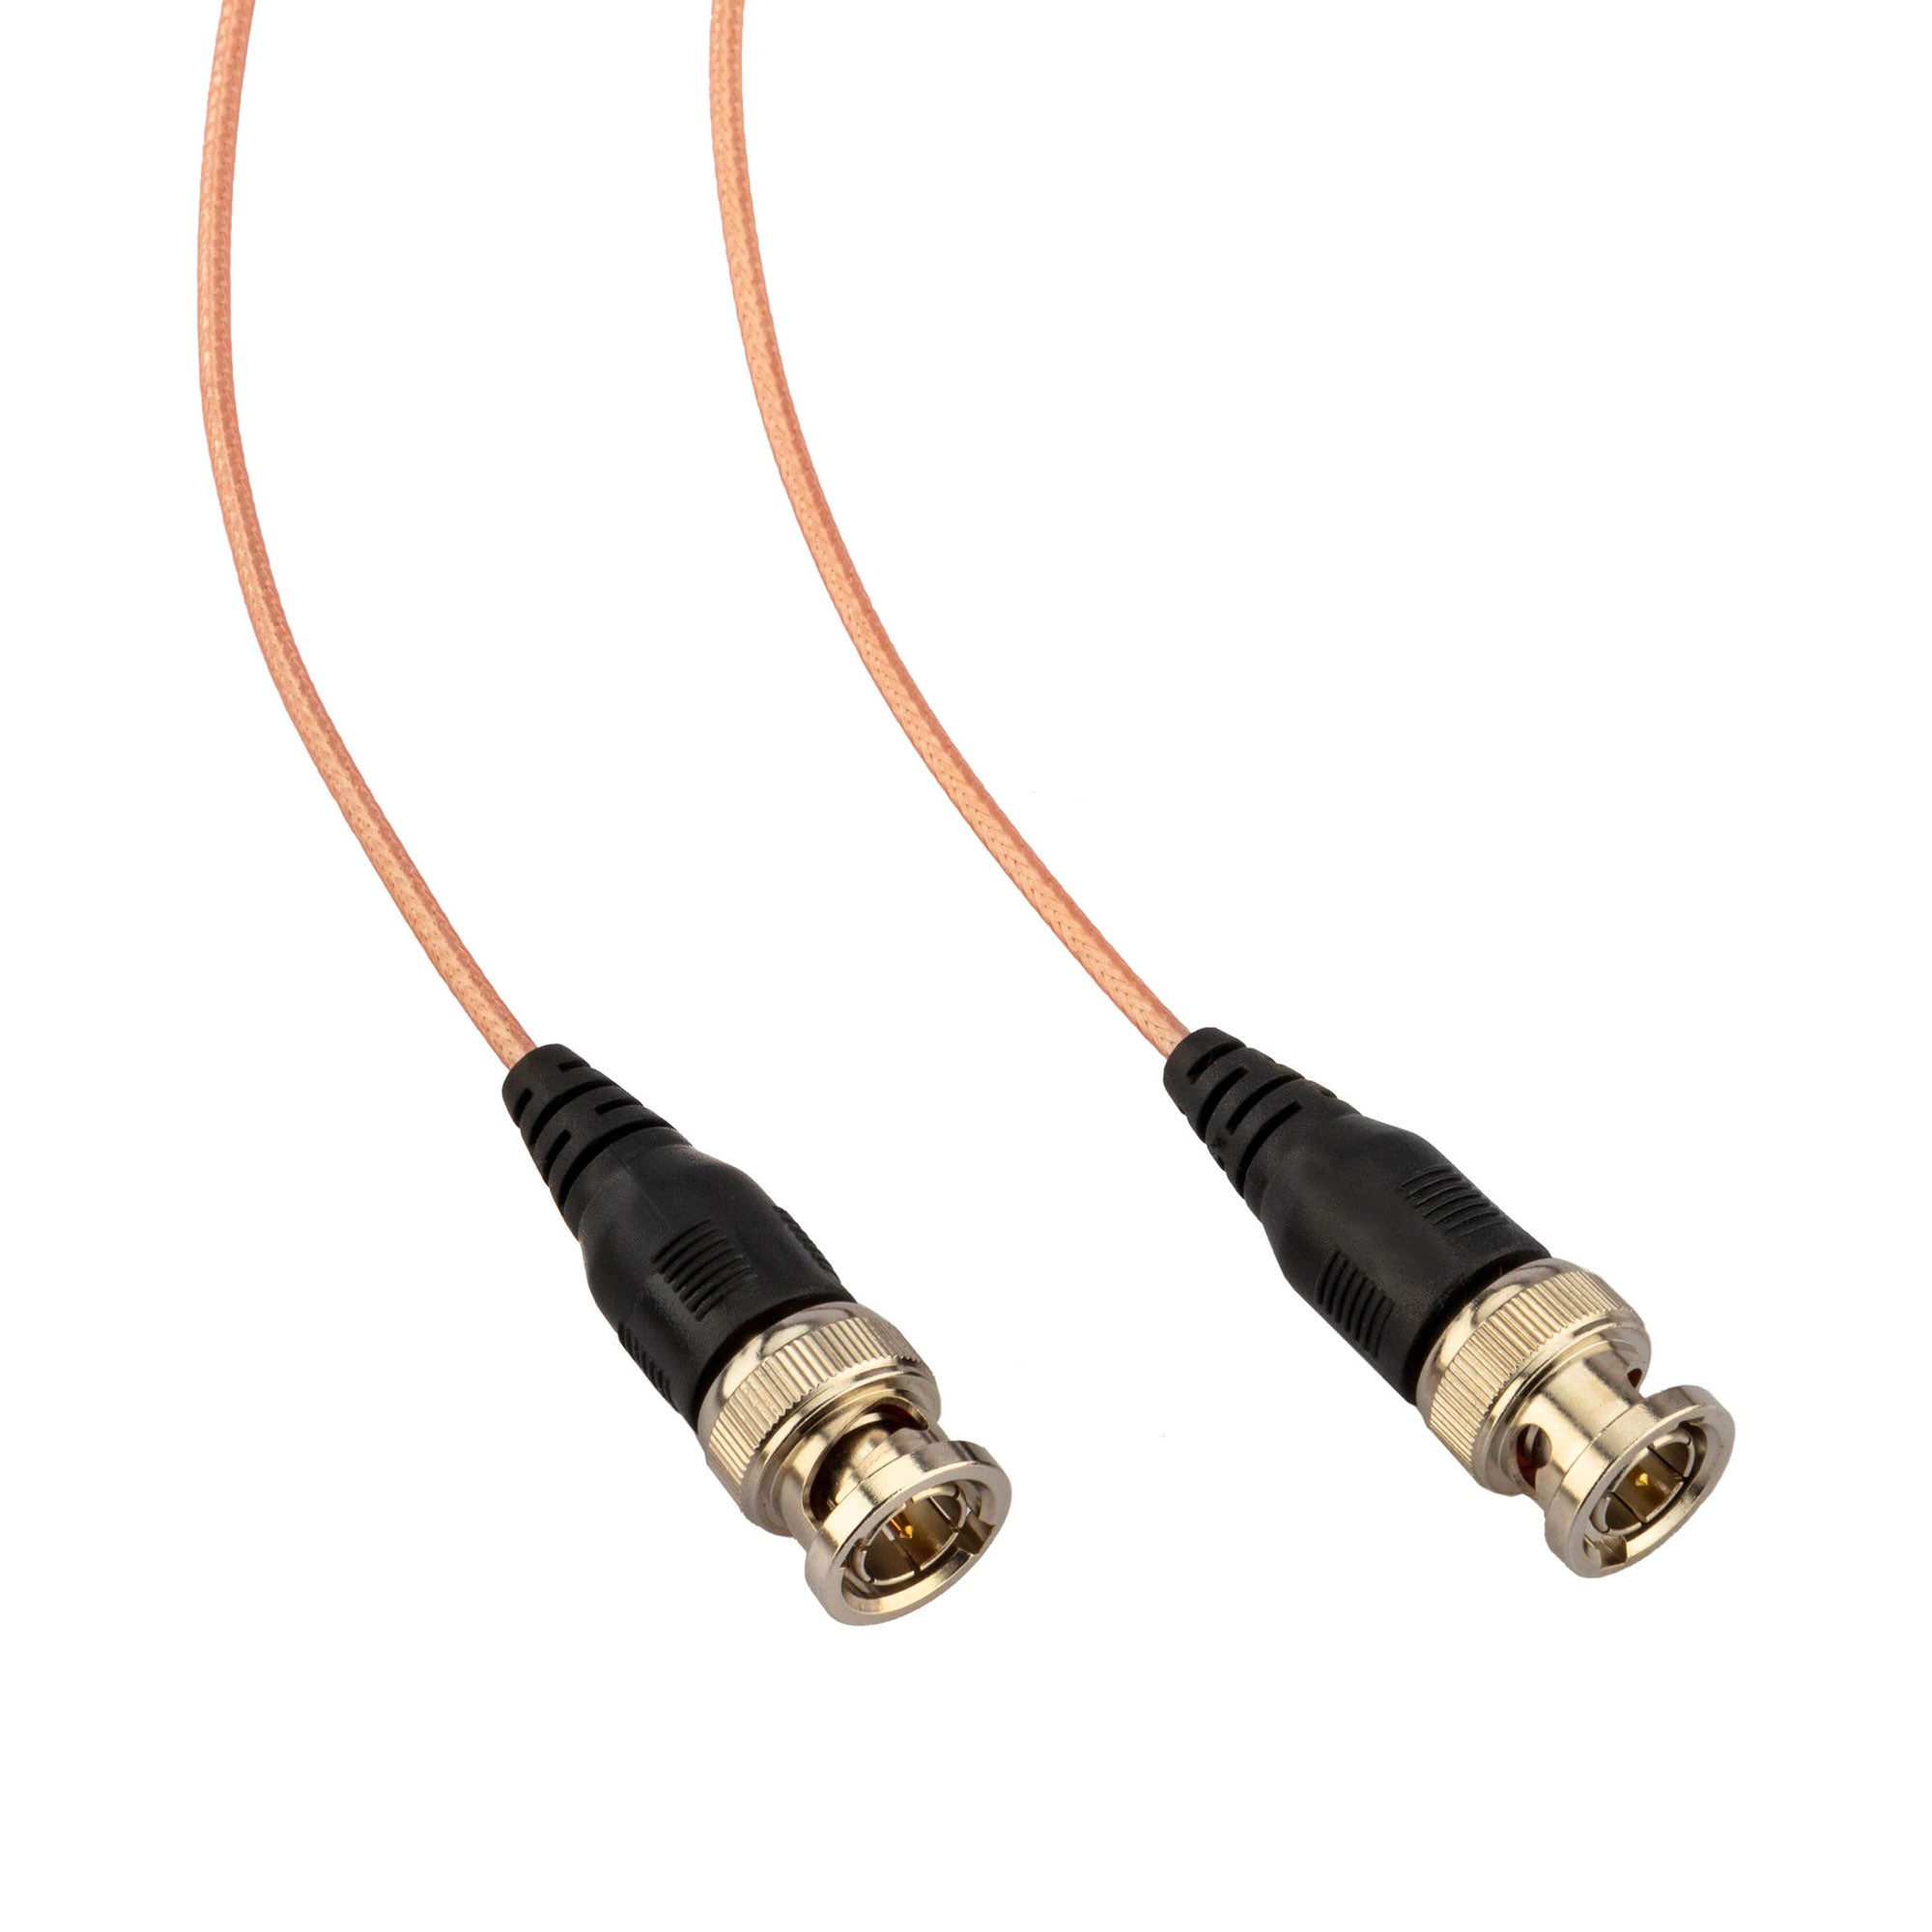 Elvid Slim SDI Cable RG-179 (2' / 60cm)